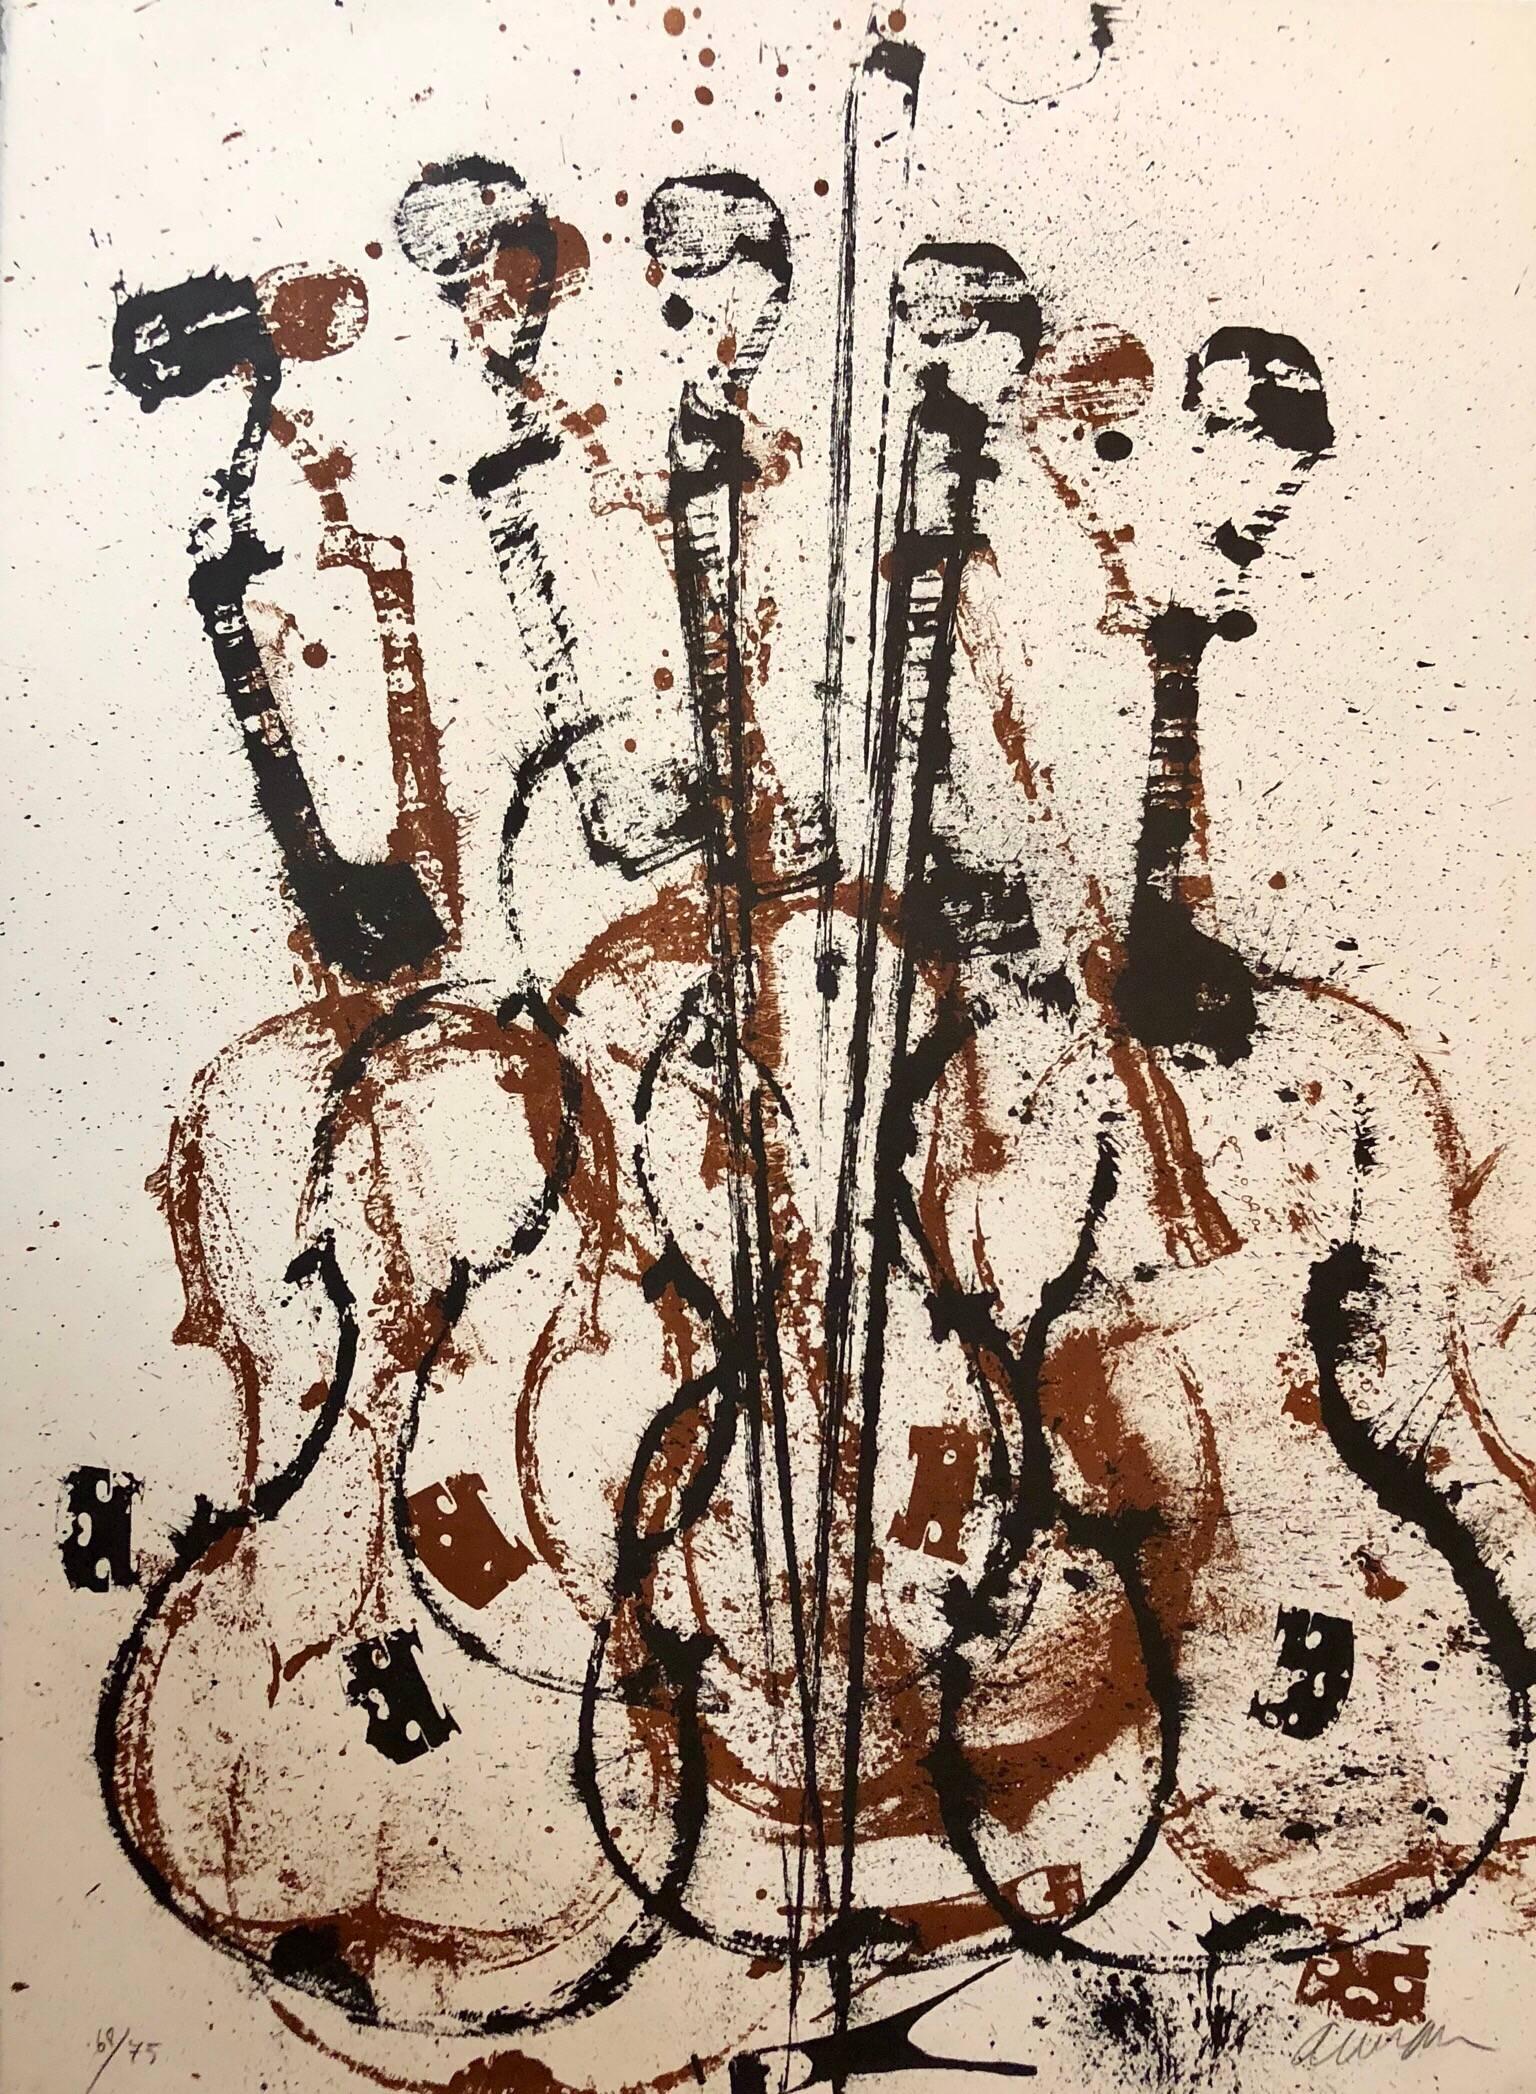 Arman Abstract Print - Violent Violin Concerto Hand Signed Lithograph Silkscreen